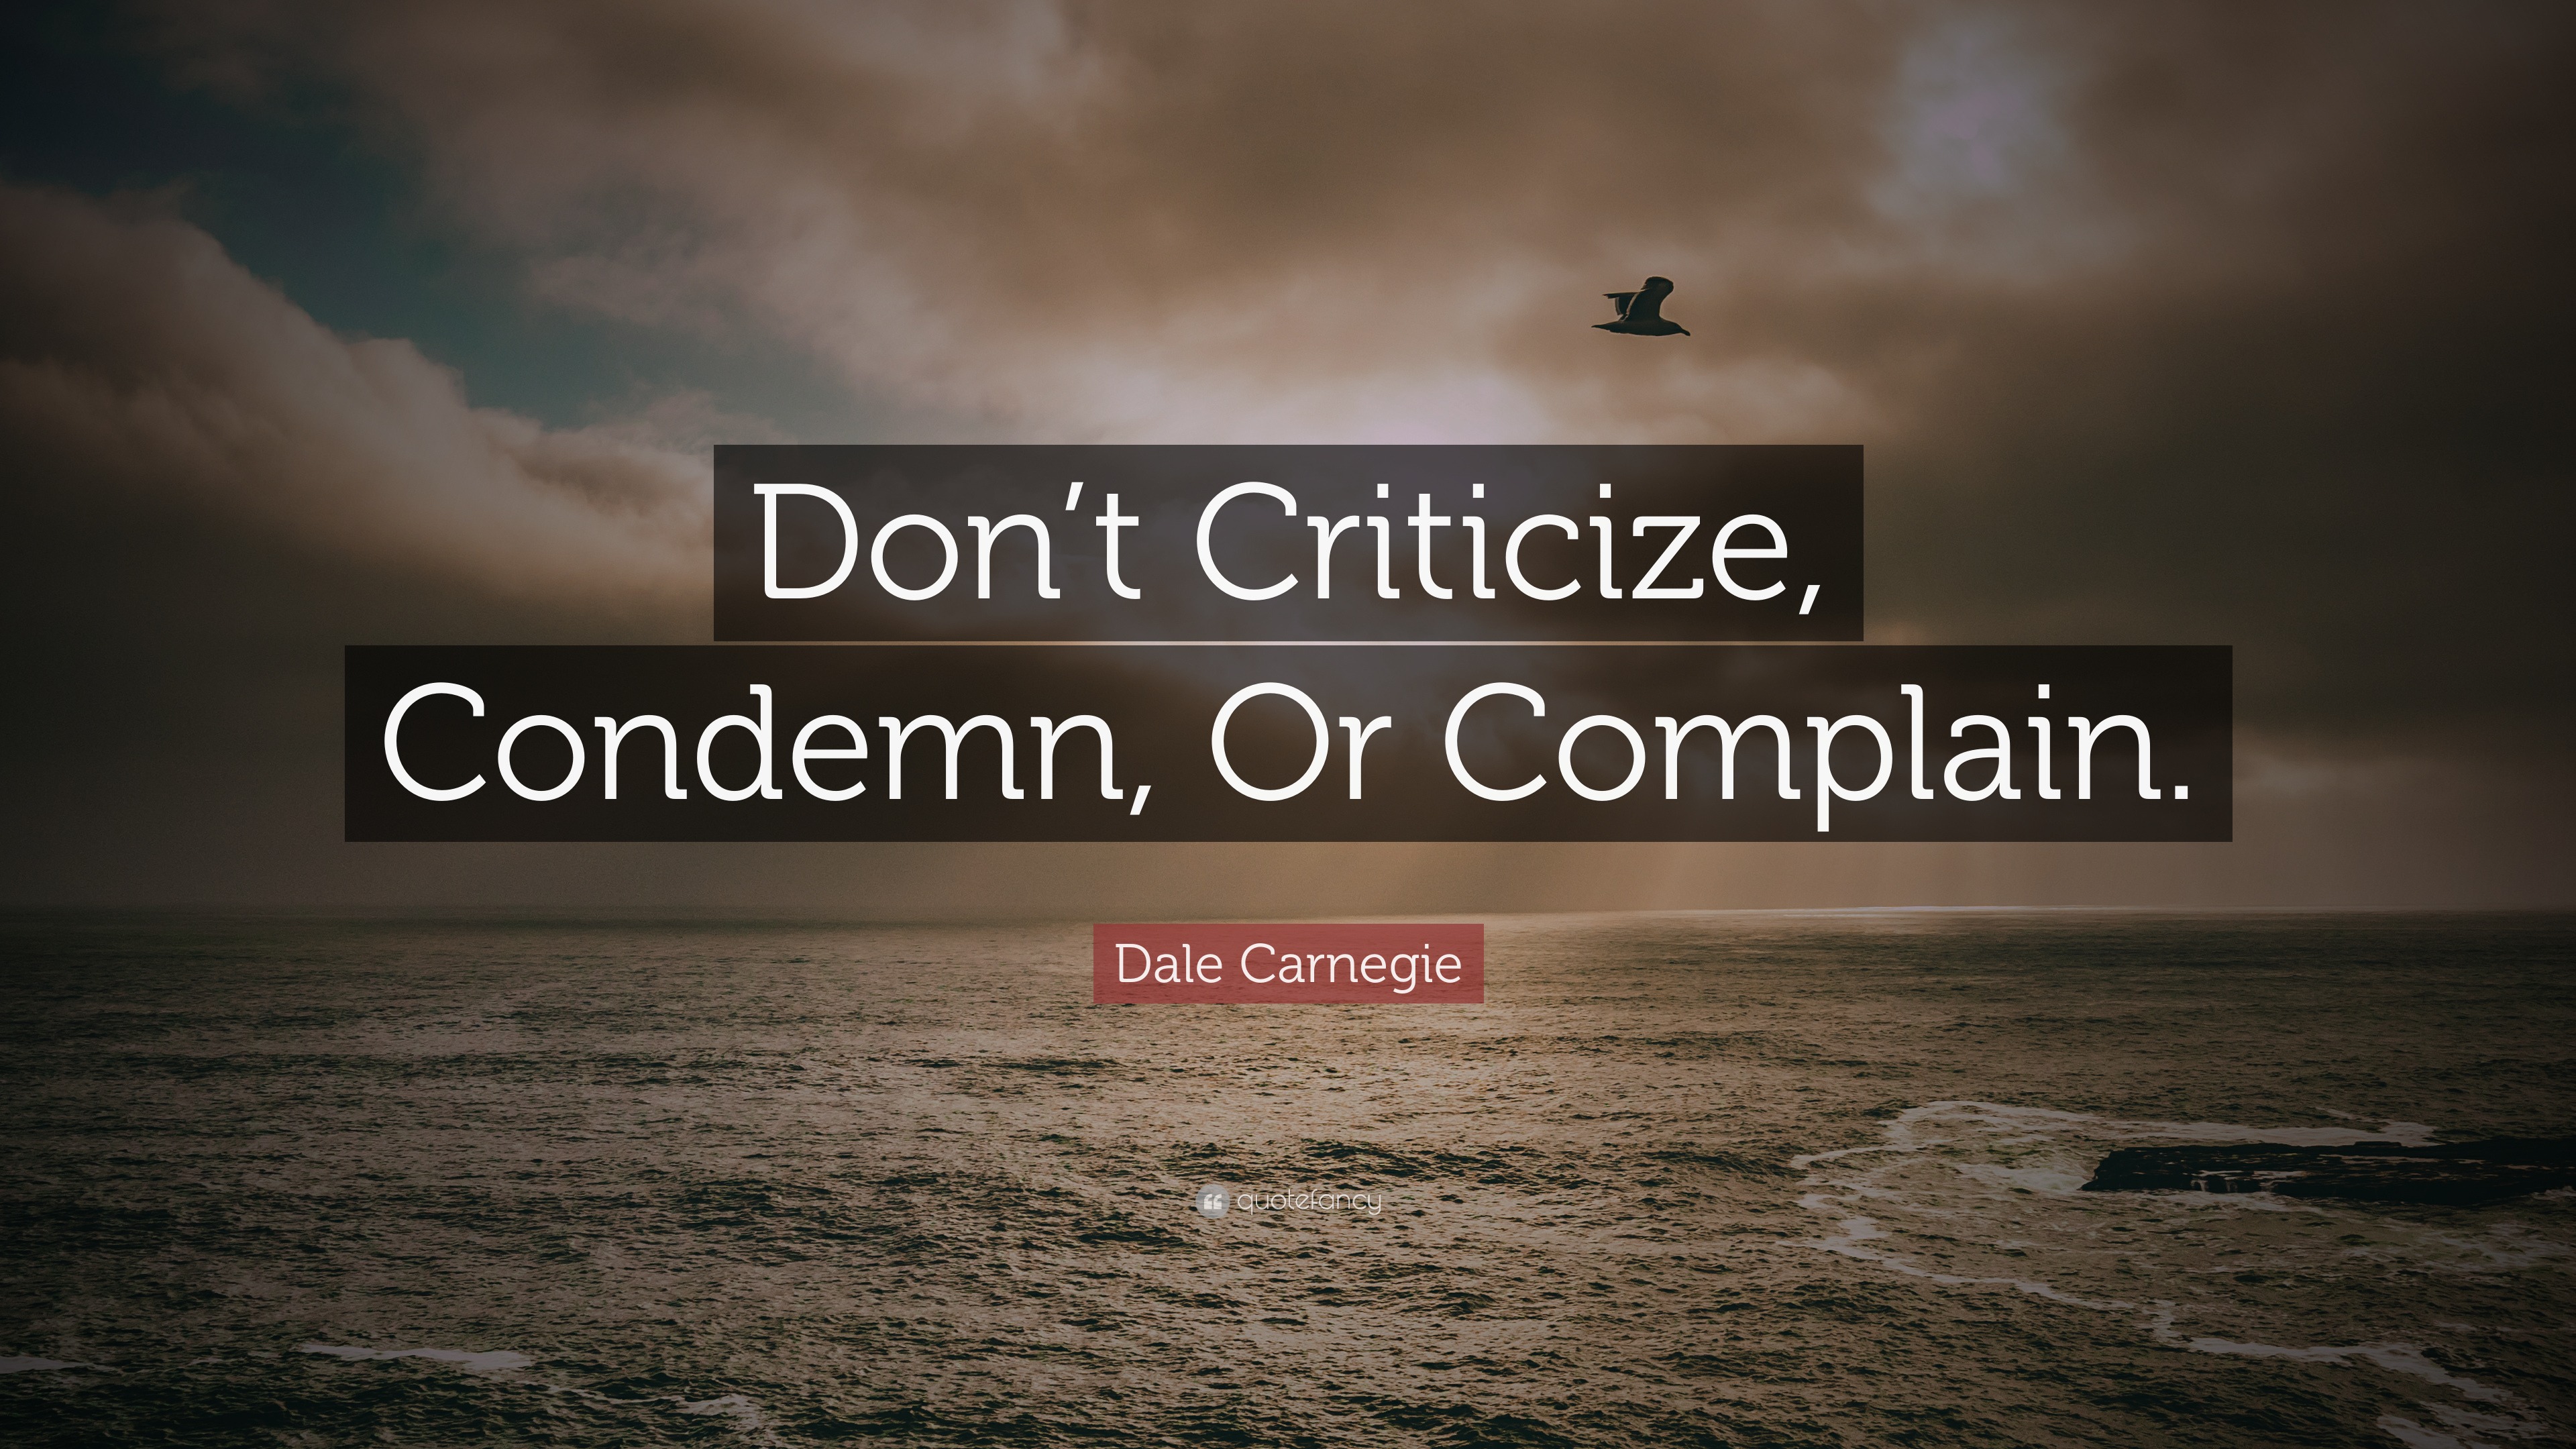 Dale Carnegie Quote: “Don’t Criticize, Condemn, Or Complain.” (12